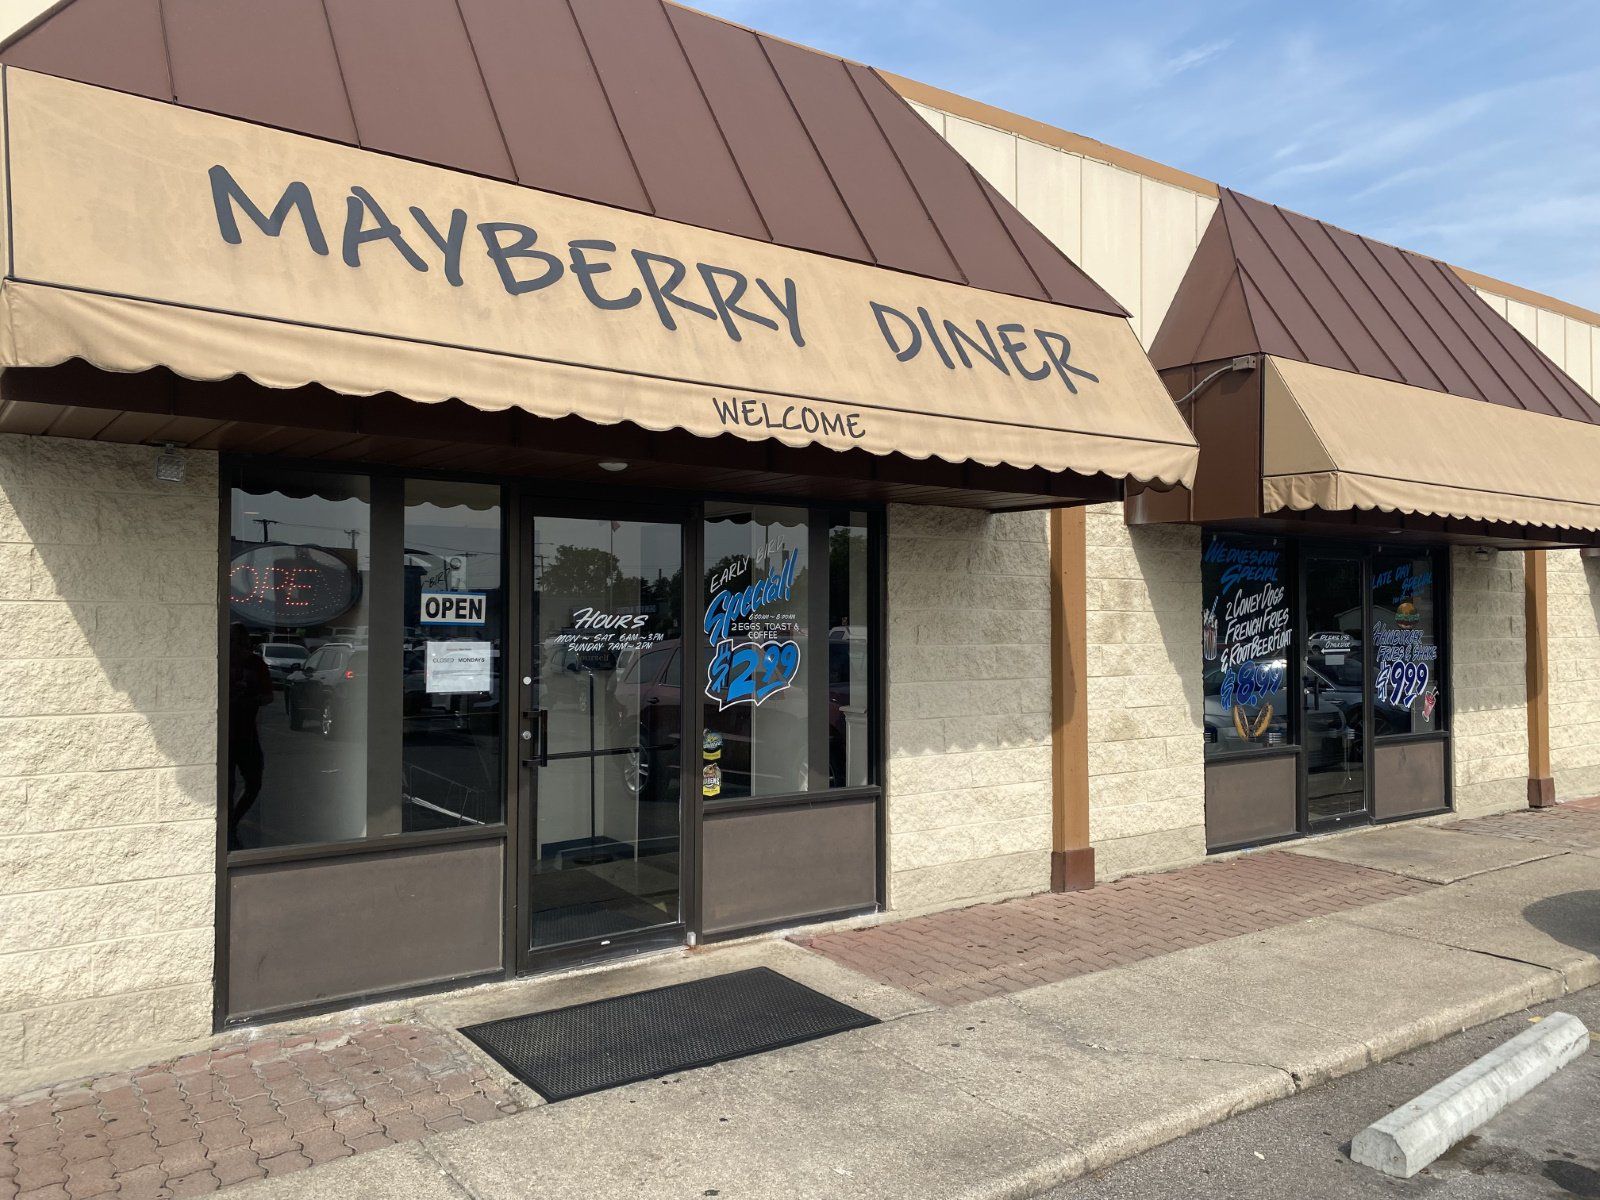 Mayberry Diner - Outside Building Image - Sylvania Ave, Toledo, Ohio Location